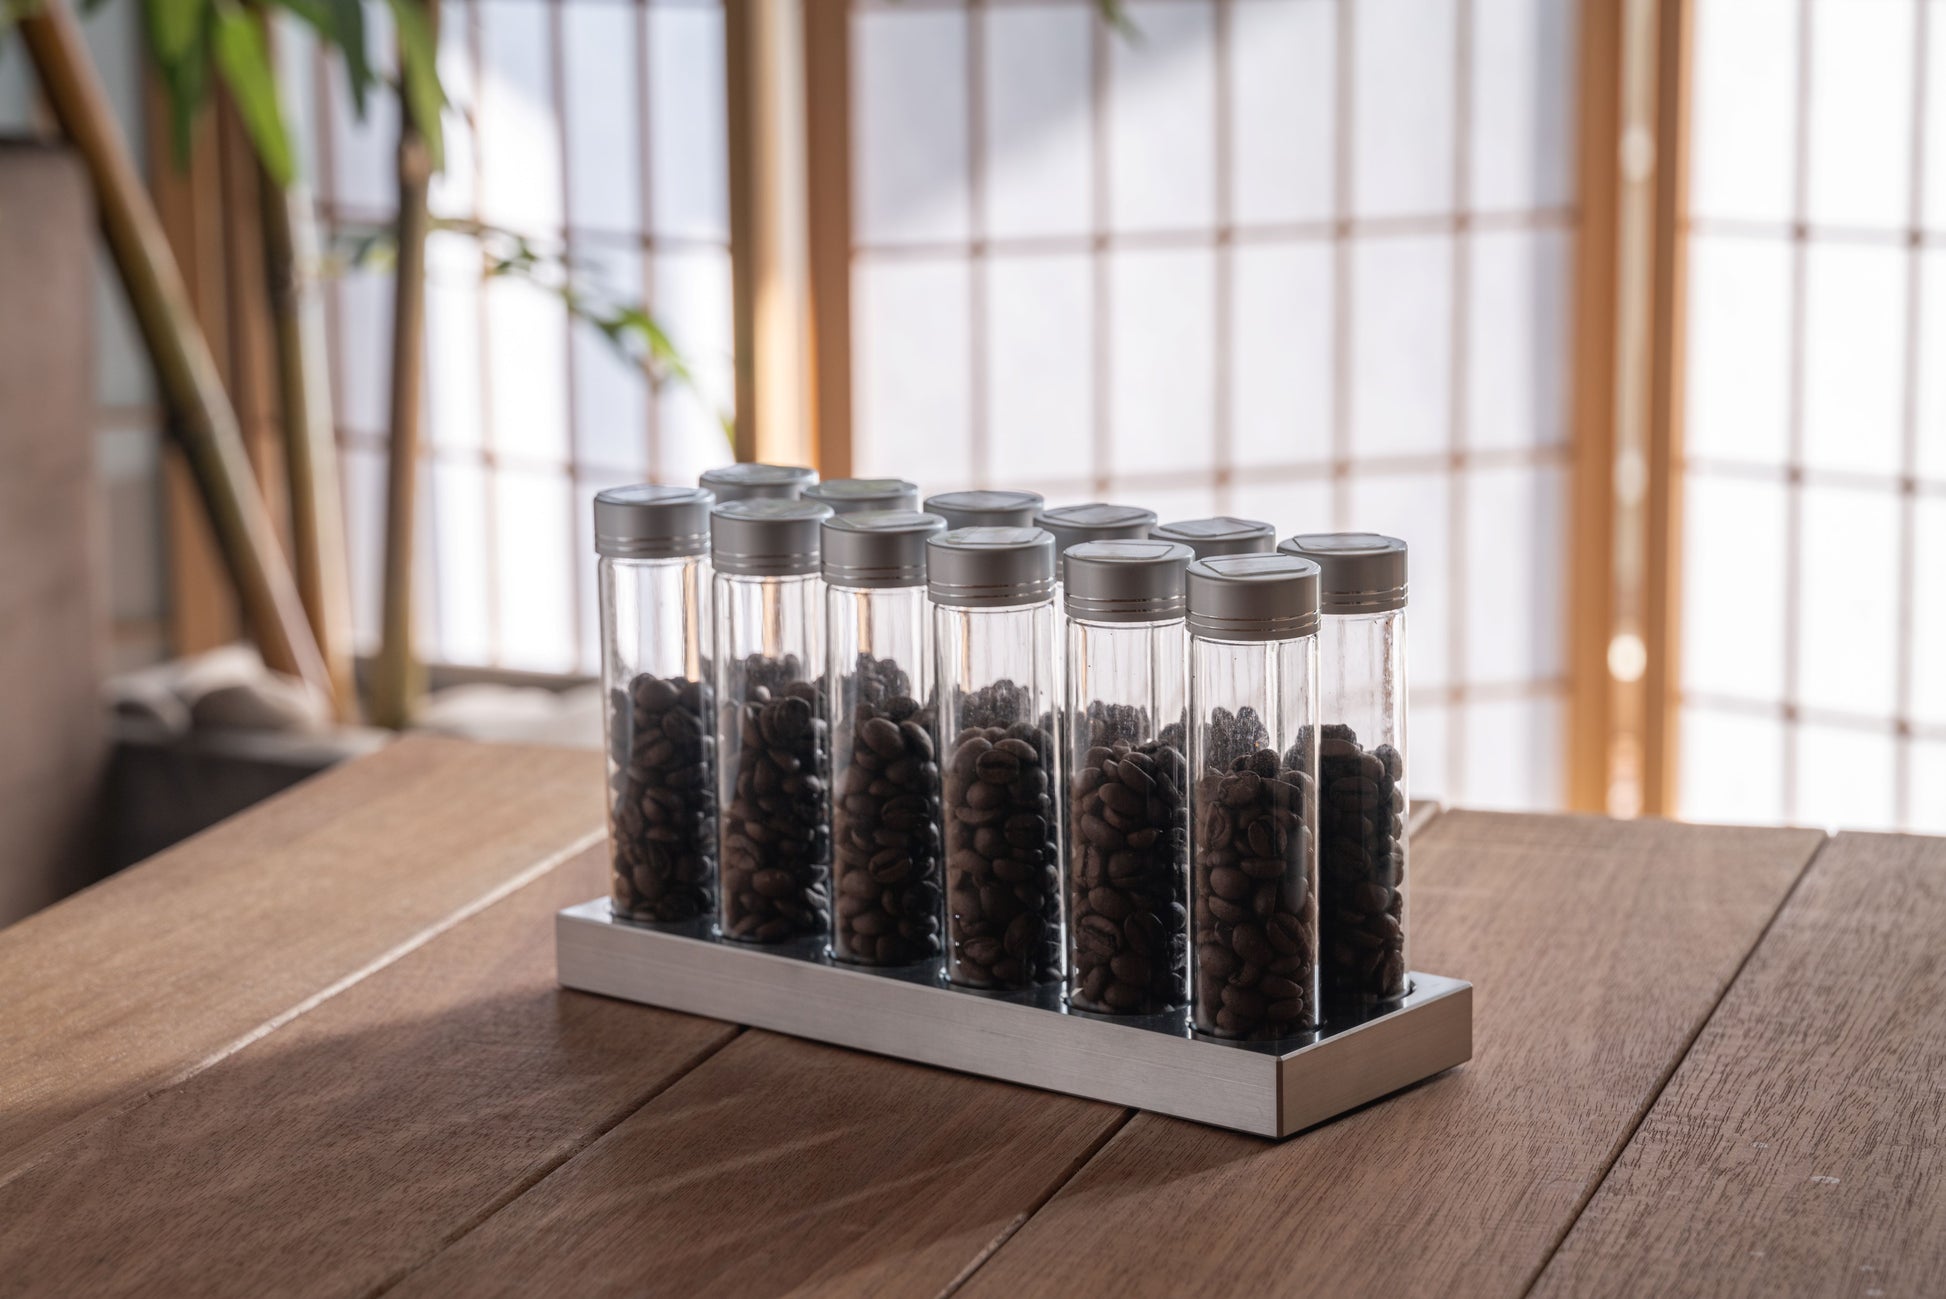 Single Dose Coffee Bean Storage Tubes / Ceramic Dosing Cup,rdt